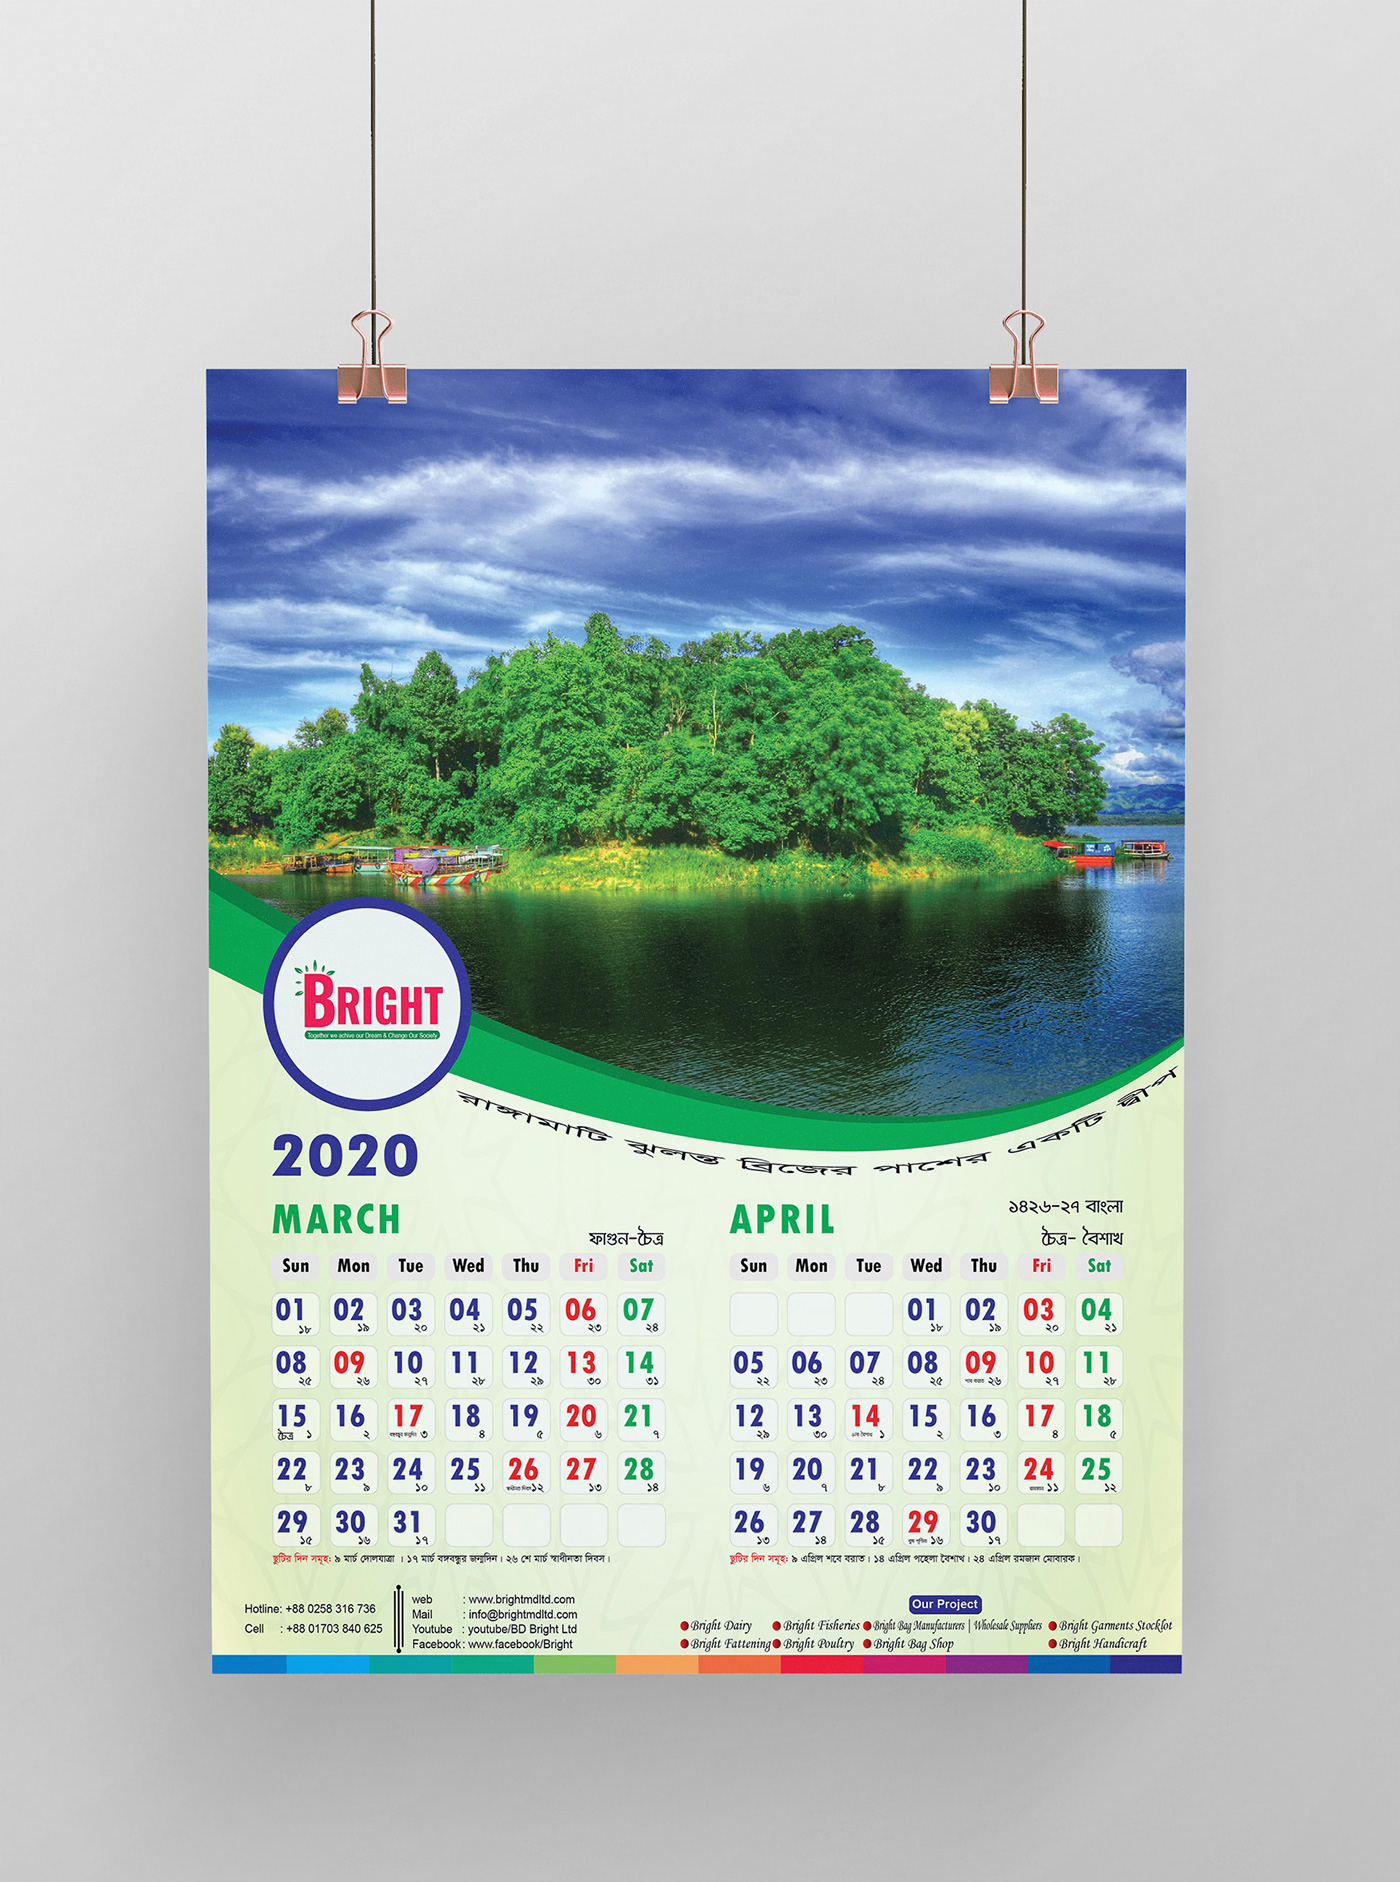 calendar 2020 Date 2020 bangla Calendar Bangla Calander 2020 calendar design wall calendar